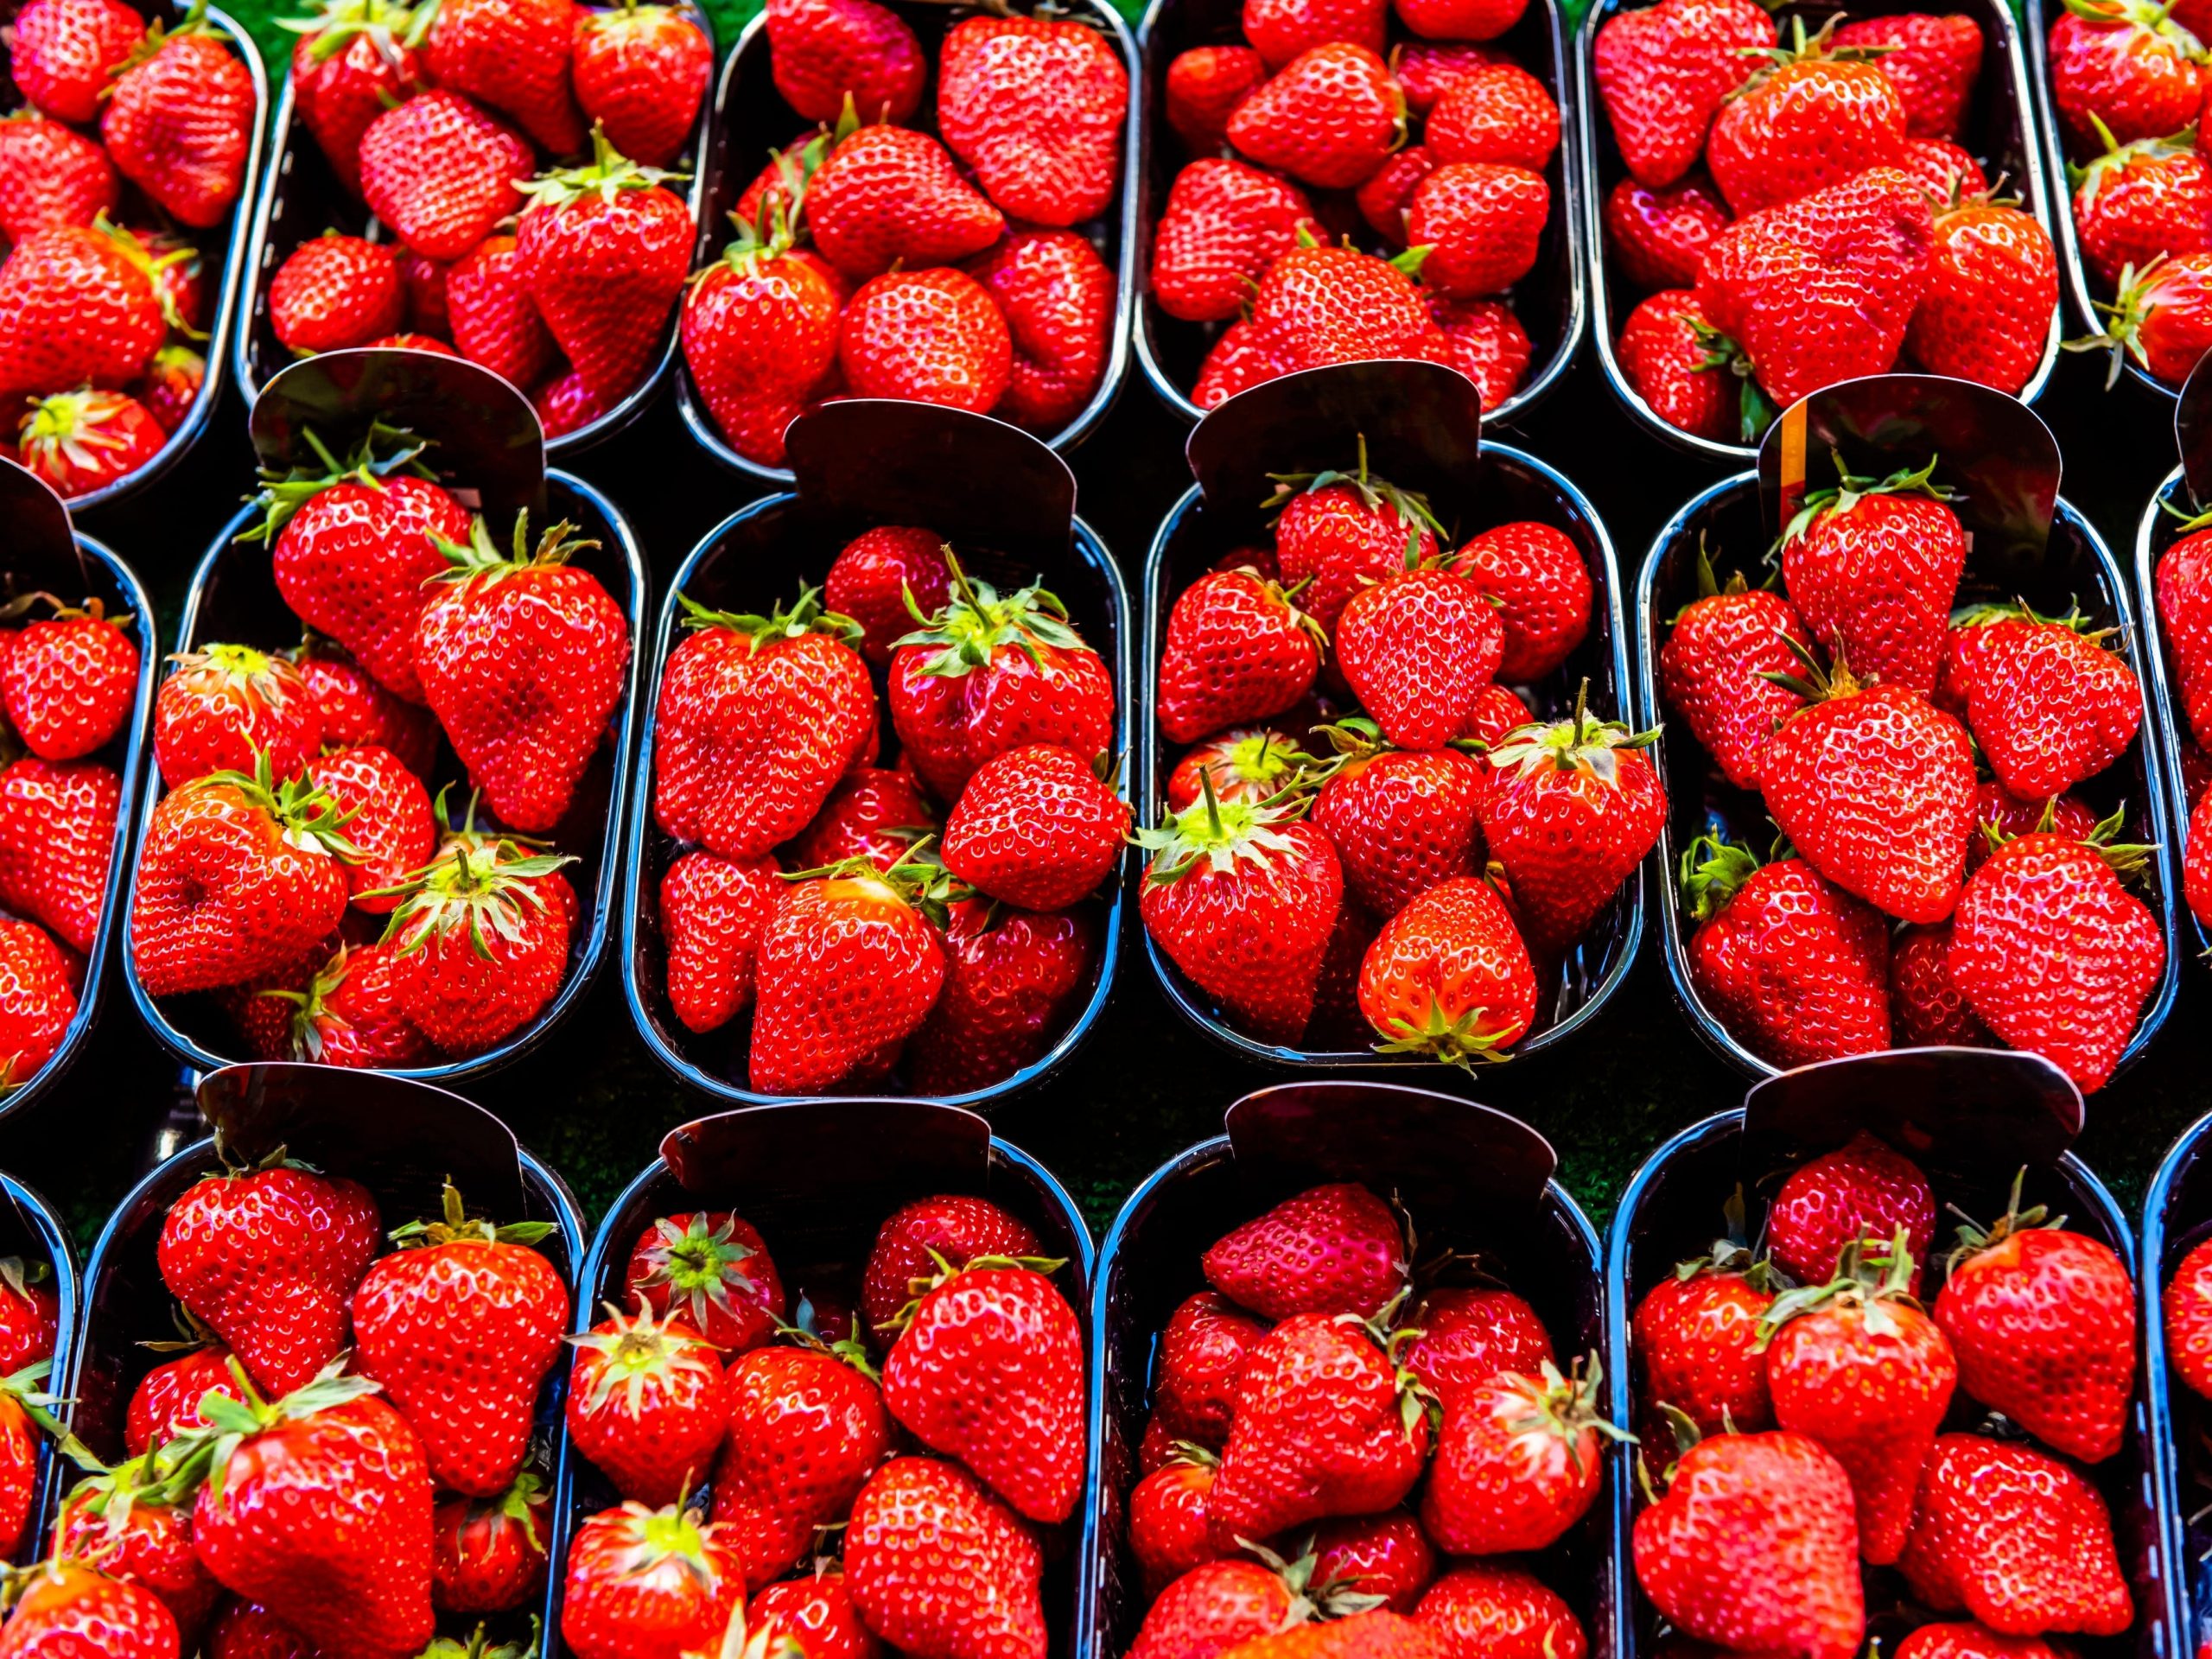 Strawberries for sale at Rue Cler street market, Paris, France.